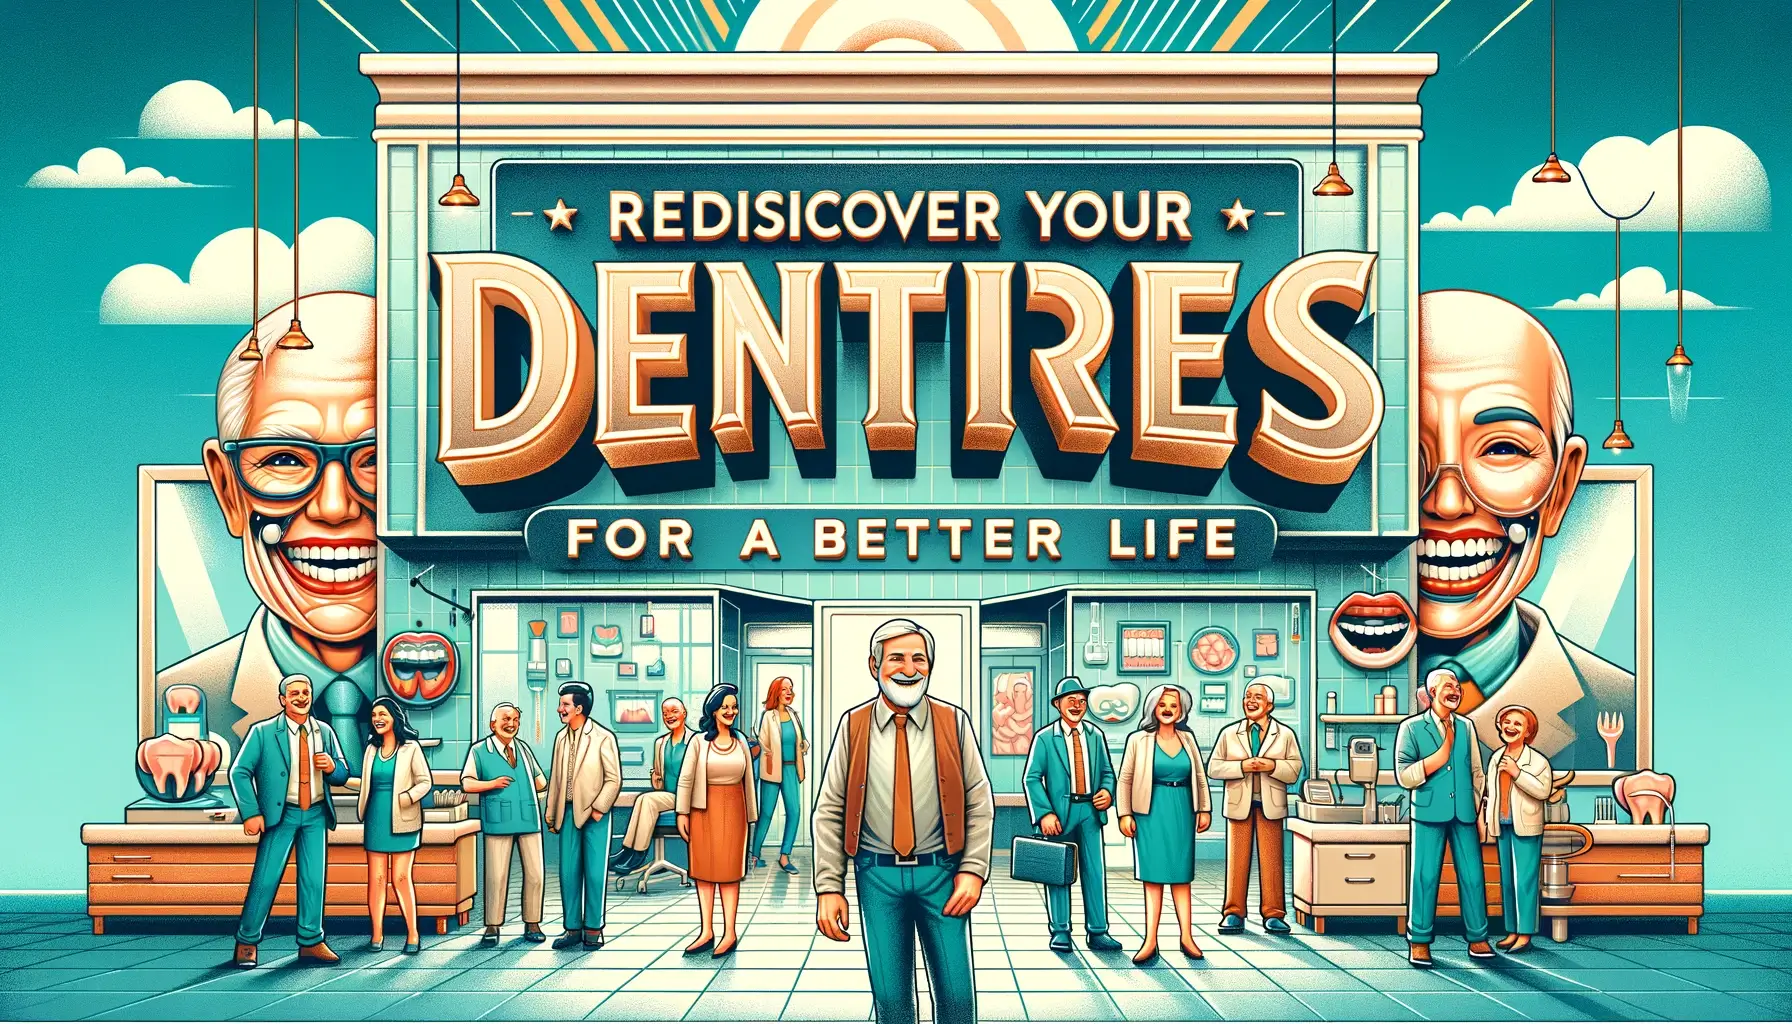 Dental Blush 956778f9-0d45-4e90-bc56-5c35cab2ccbe Dentures for a Better Life: Rediscover Your Smile Dental  